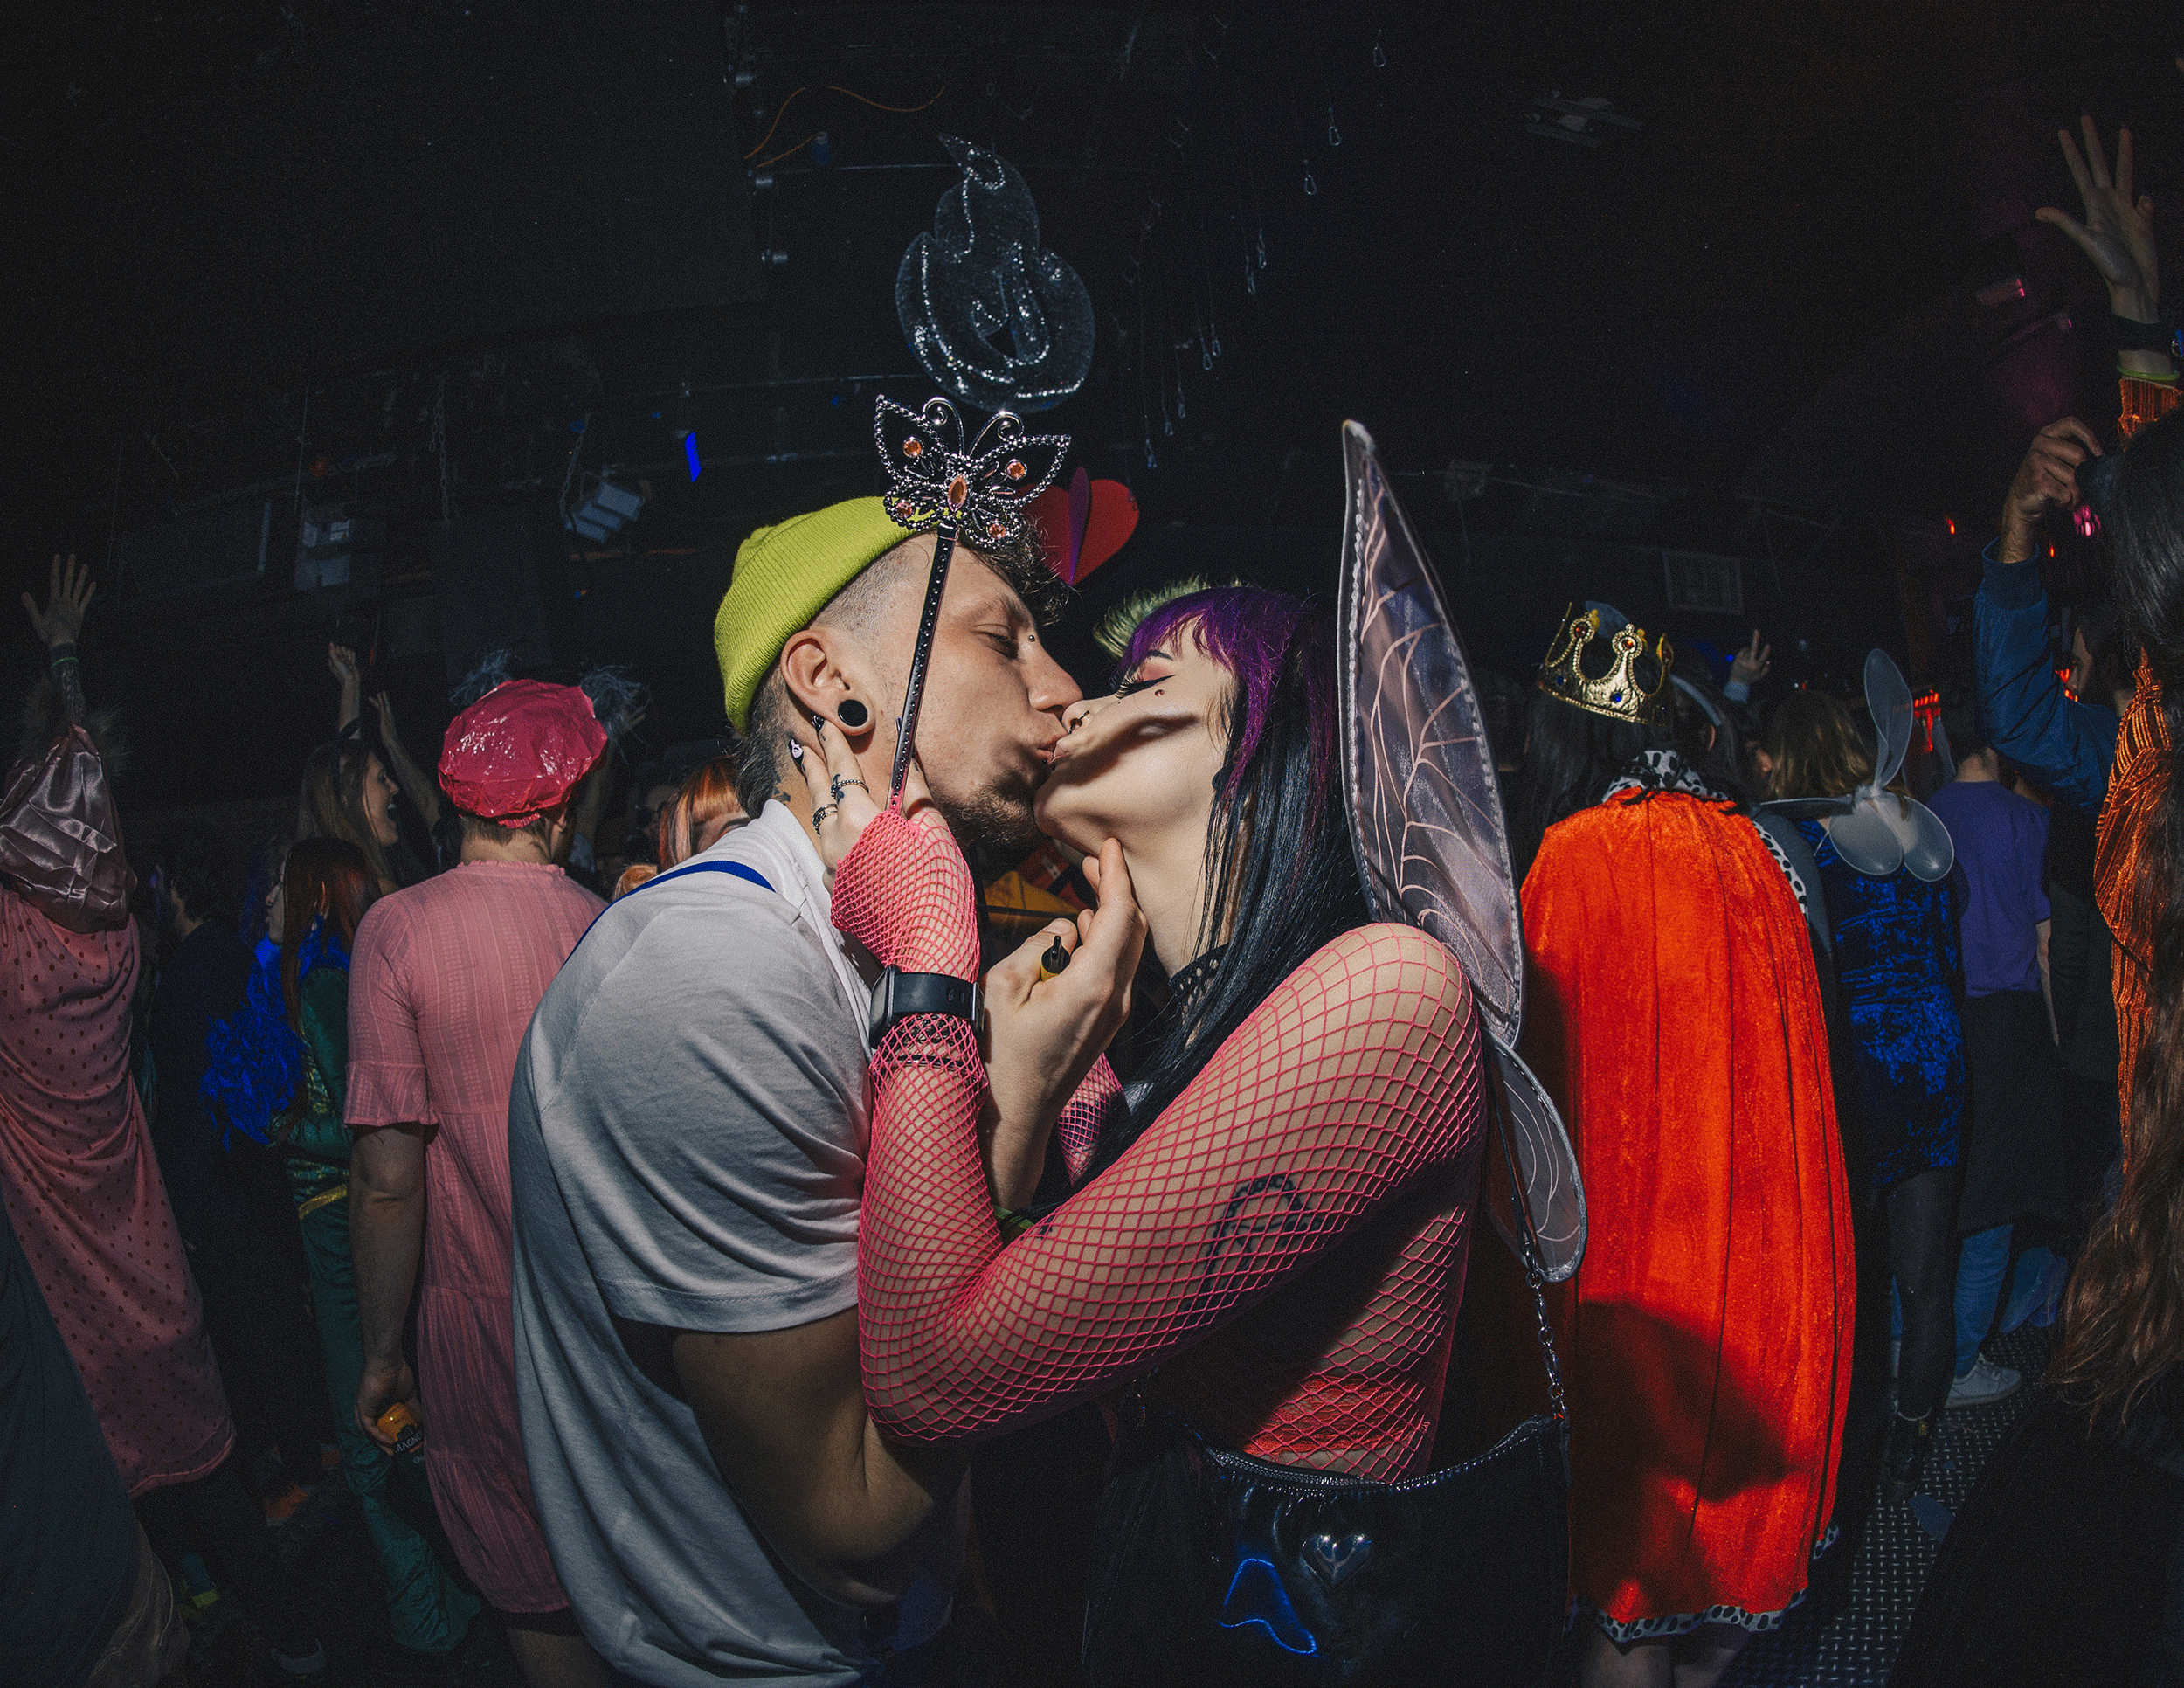 Shrek Rave, London: Sepasang kekasih ciuman